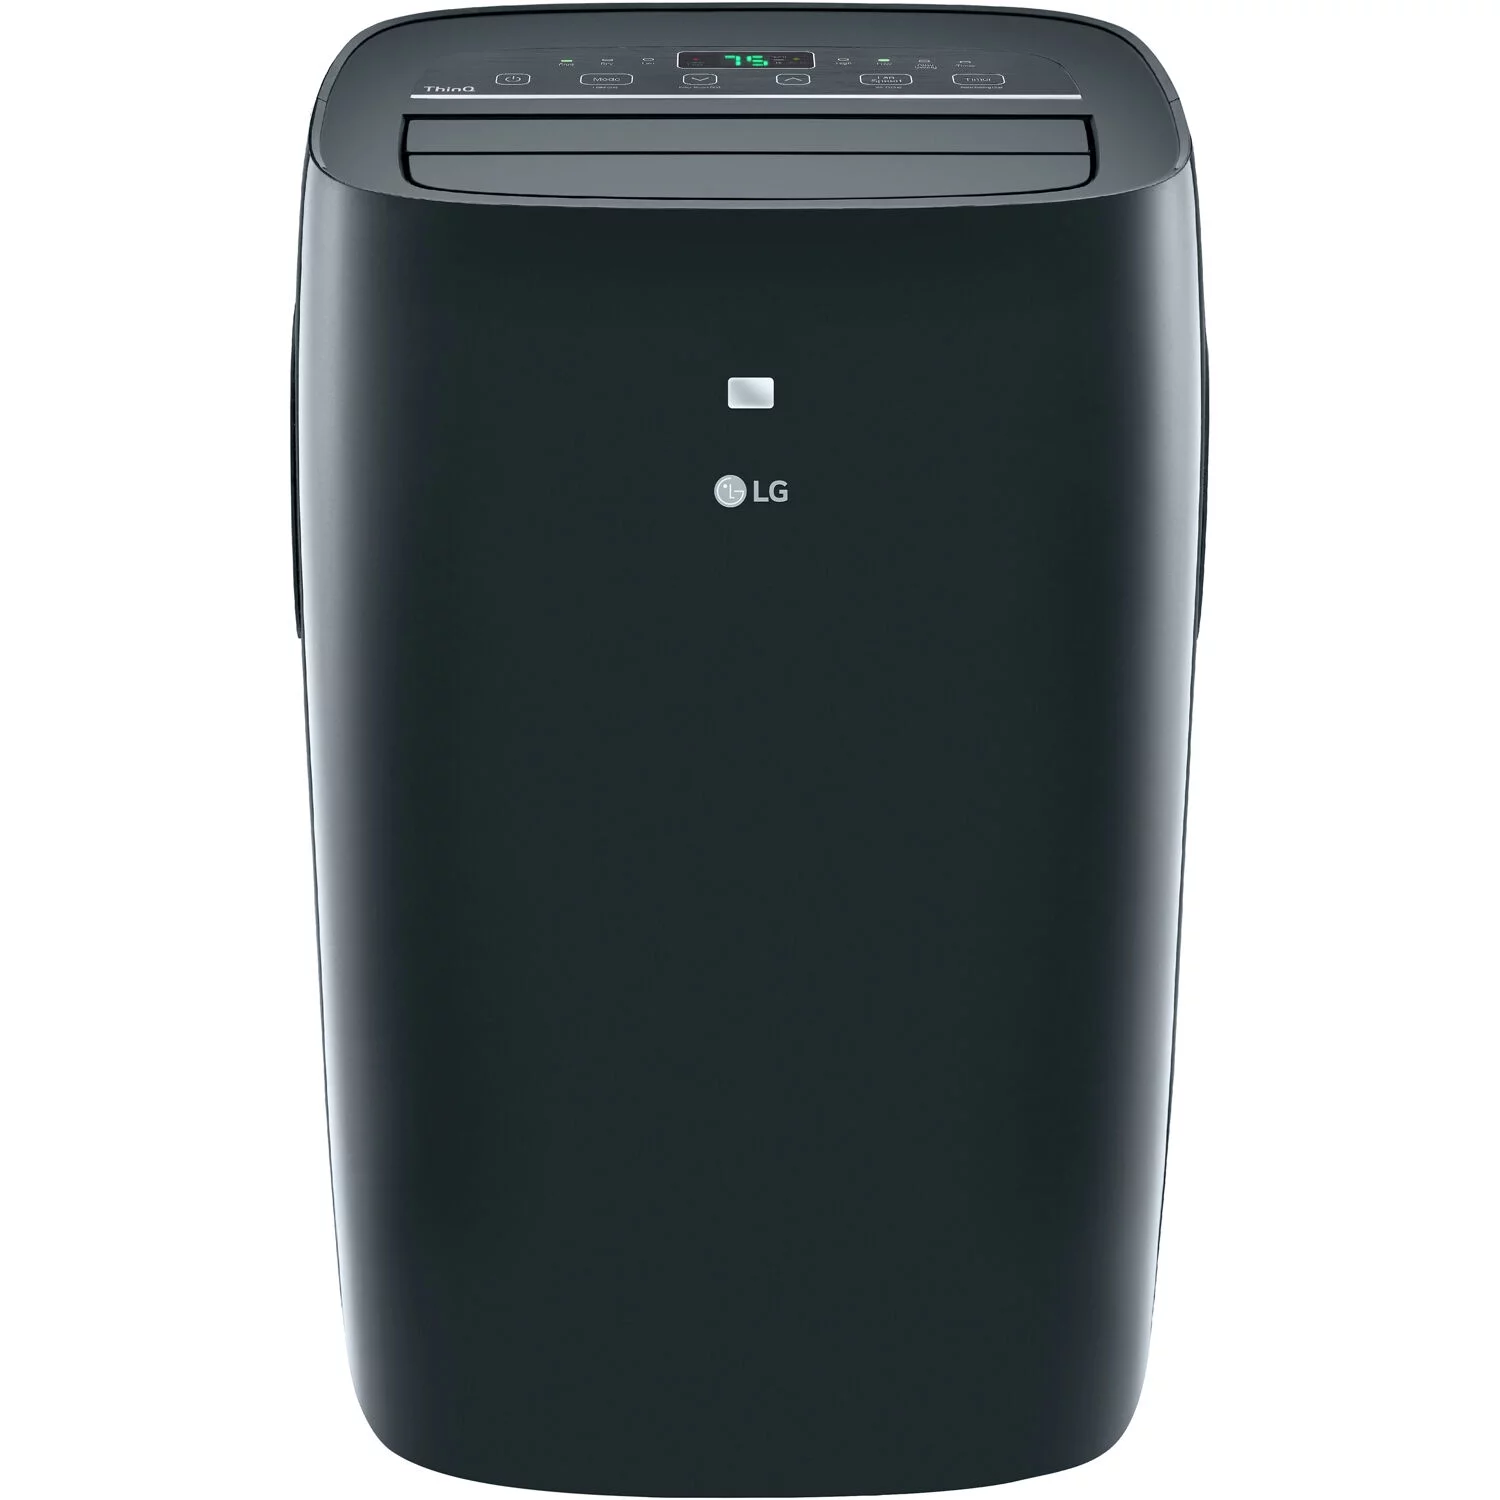 LG 8,000 BTU (DOE) / 12,000 BTU (ASHRAE) Smart Portable Air Conditioner, Cools 400 Sq.Ft. (14' x 25' room size), Smartphone & Voice Control works with LG ThinQ, Amazon Alexa and Hey Google, 115V